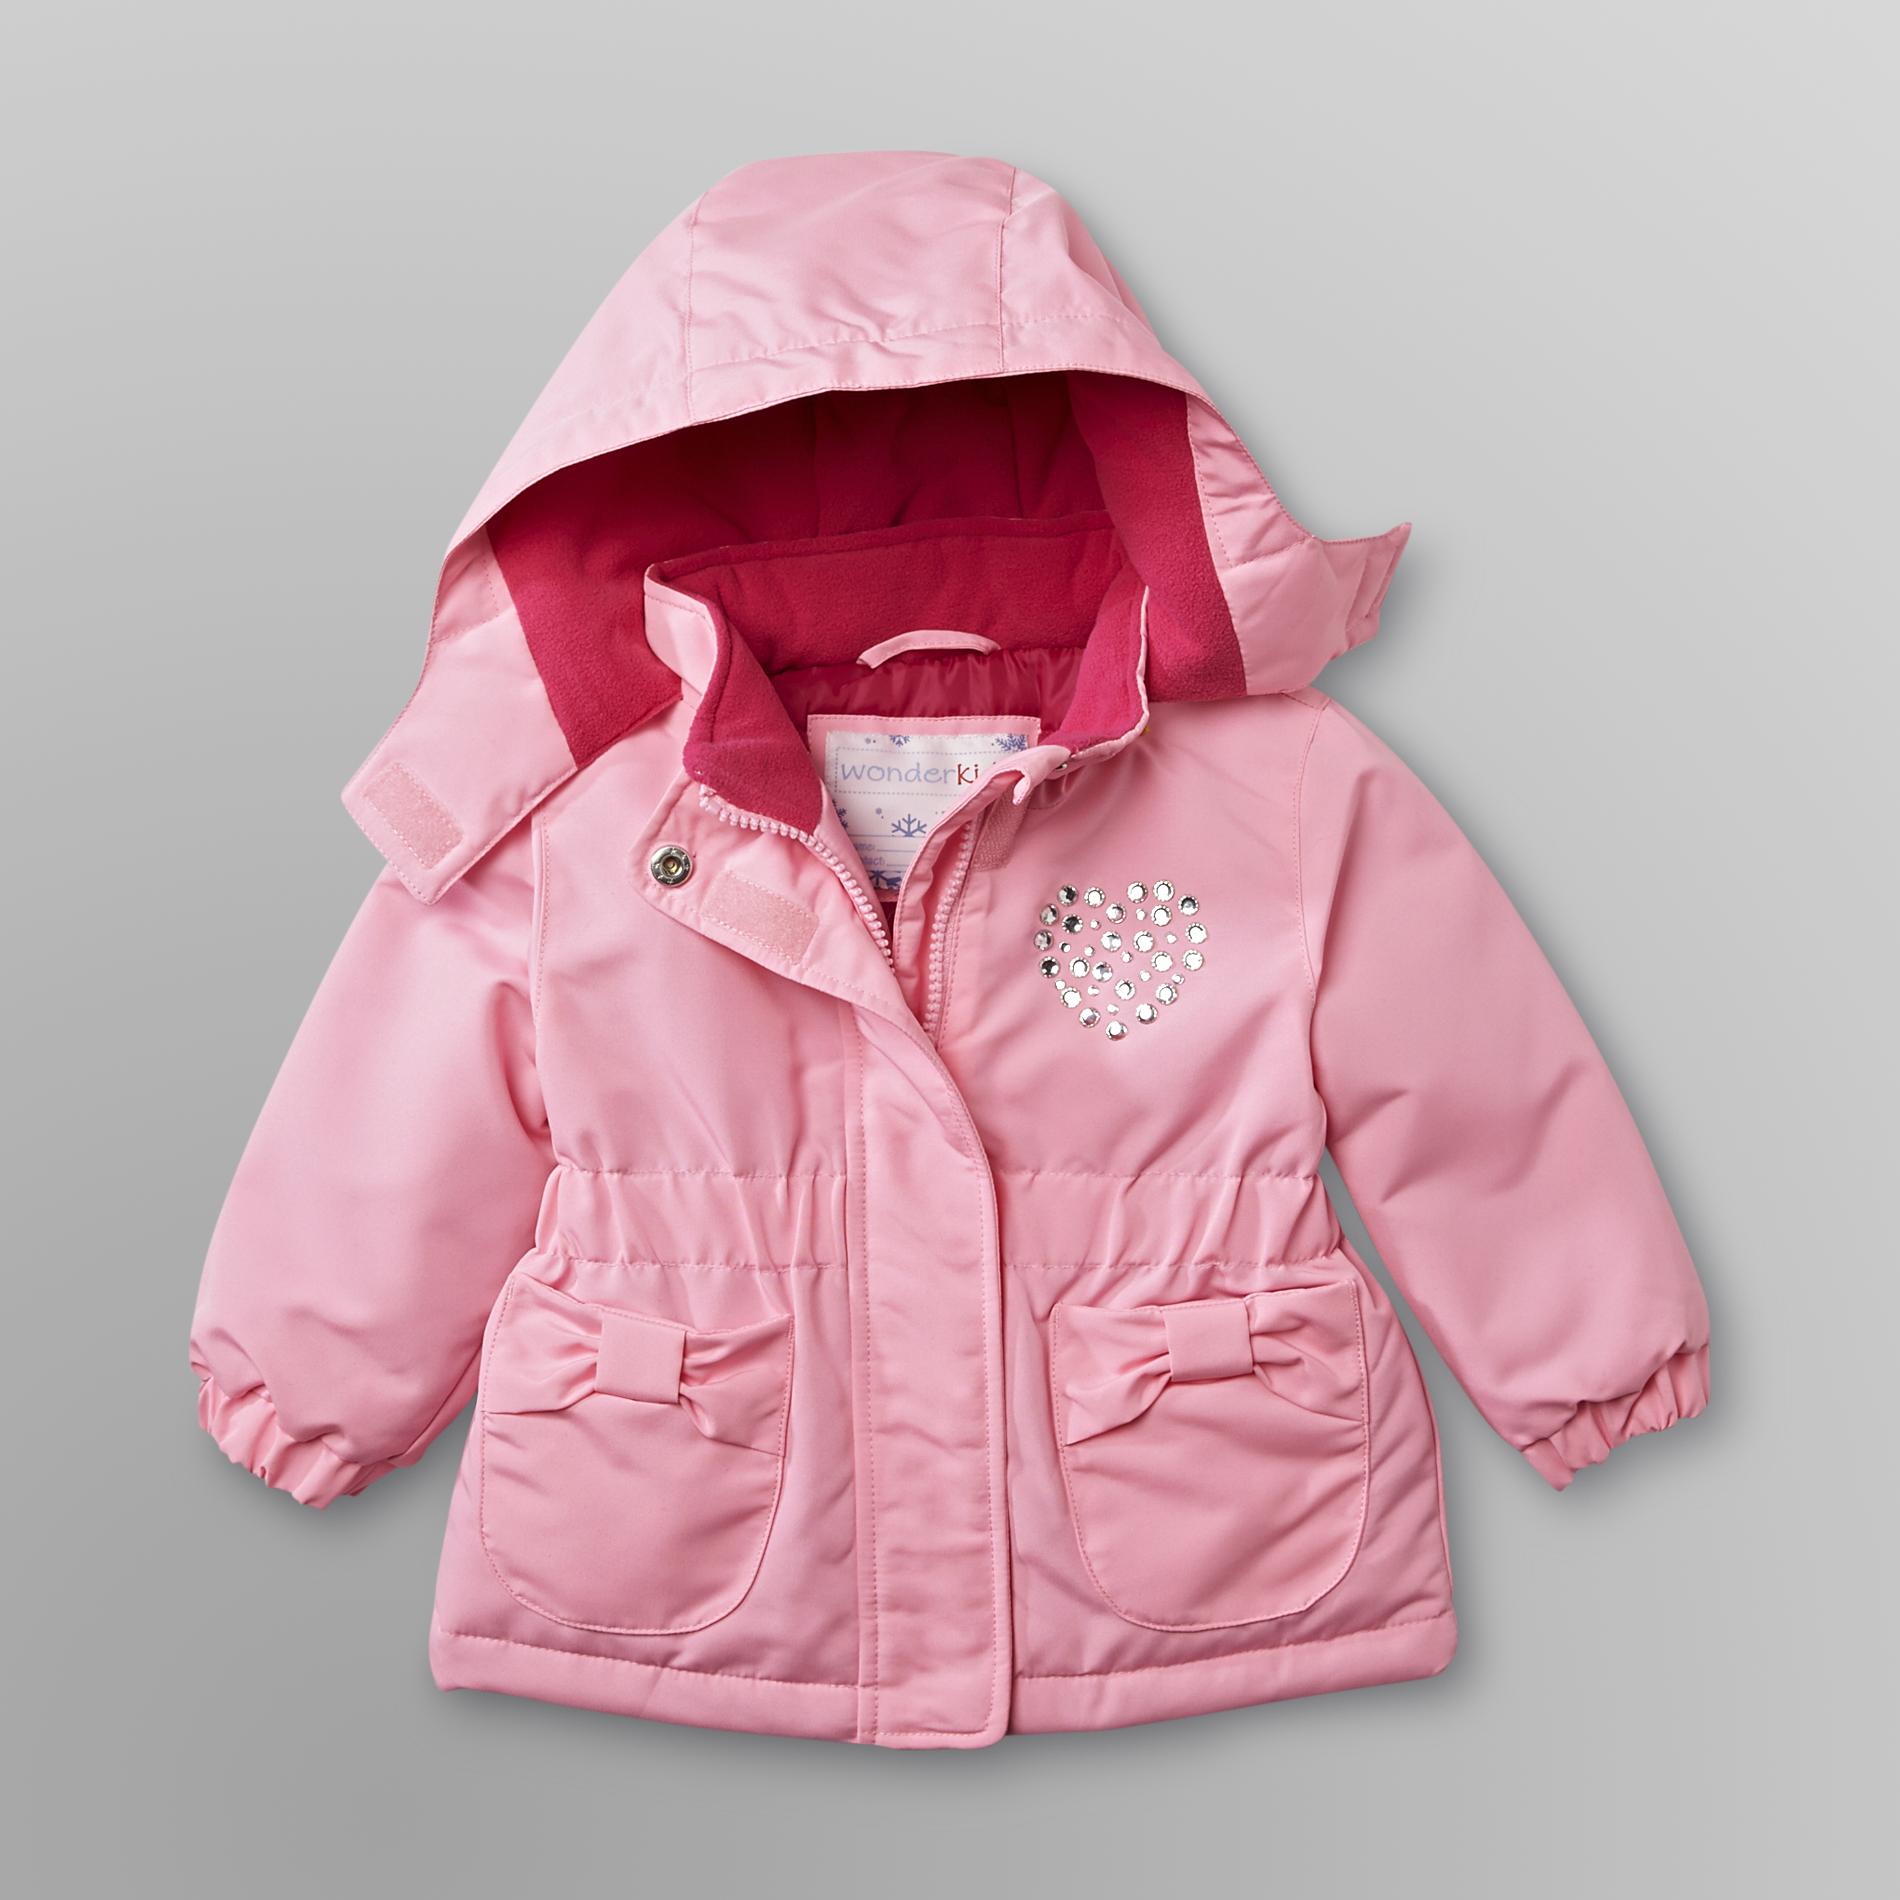 WonderKids Infant and Toddler Girls' Hooded Fully Lined Winter Jacket